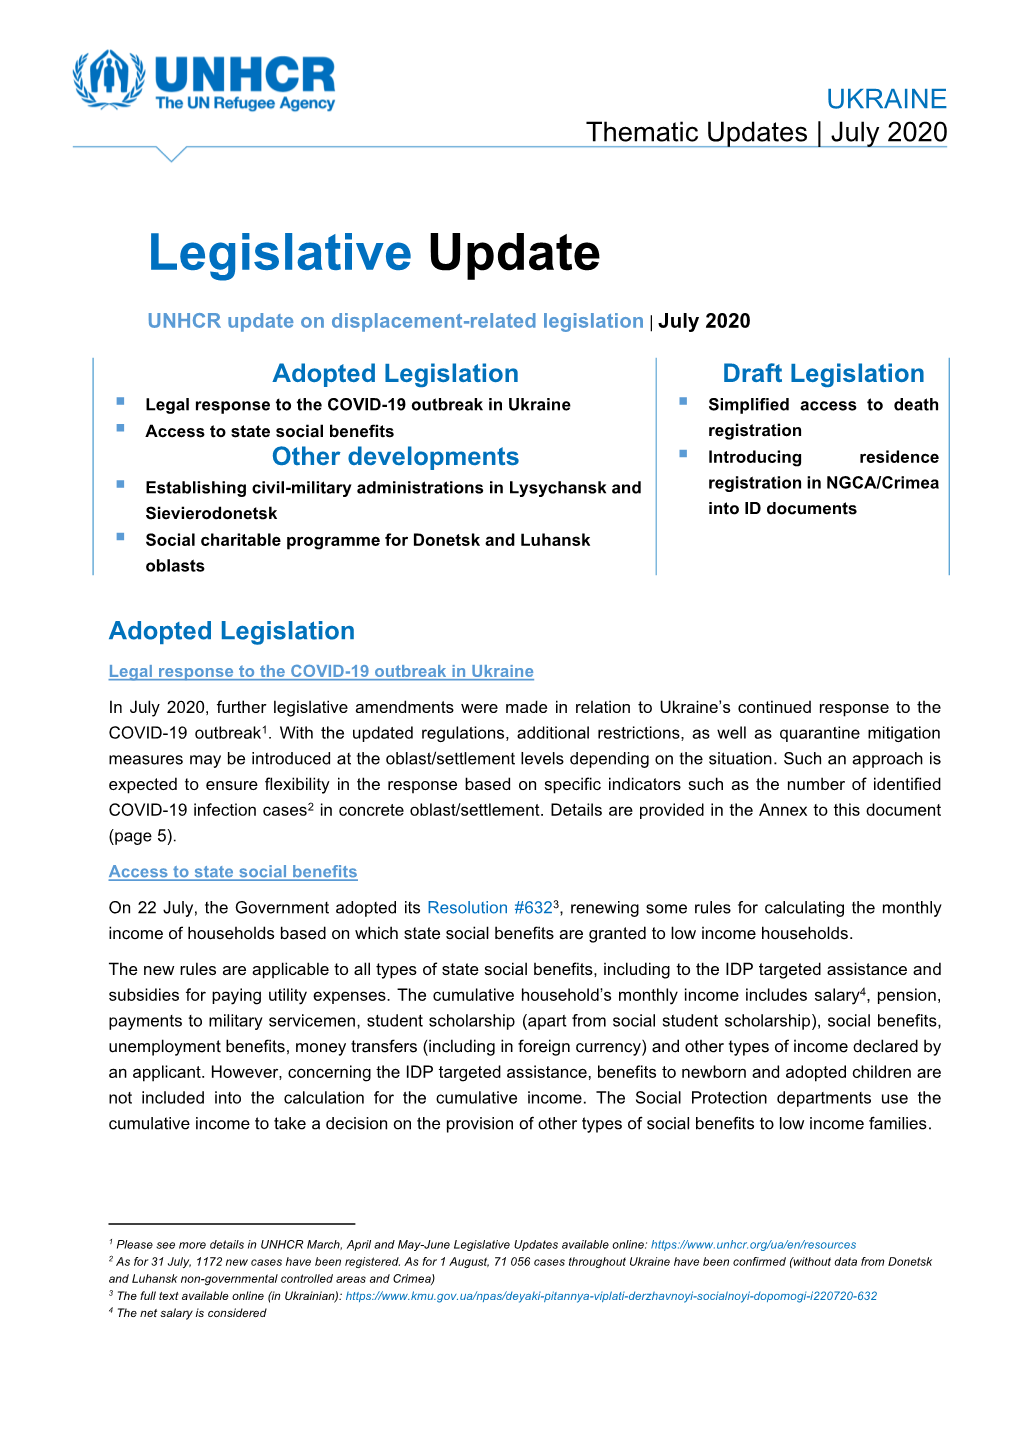 Legislative Update for July 2020